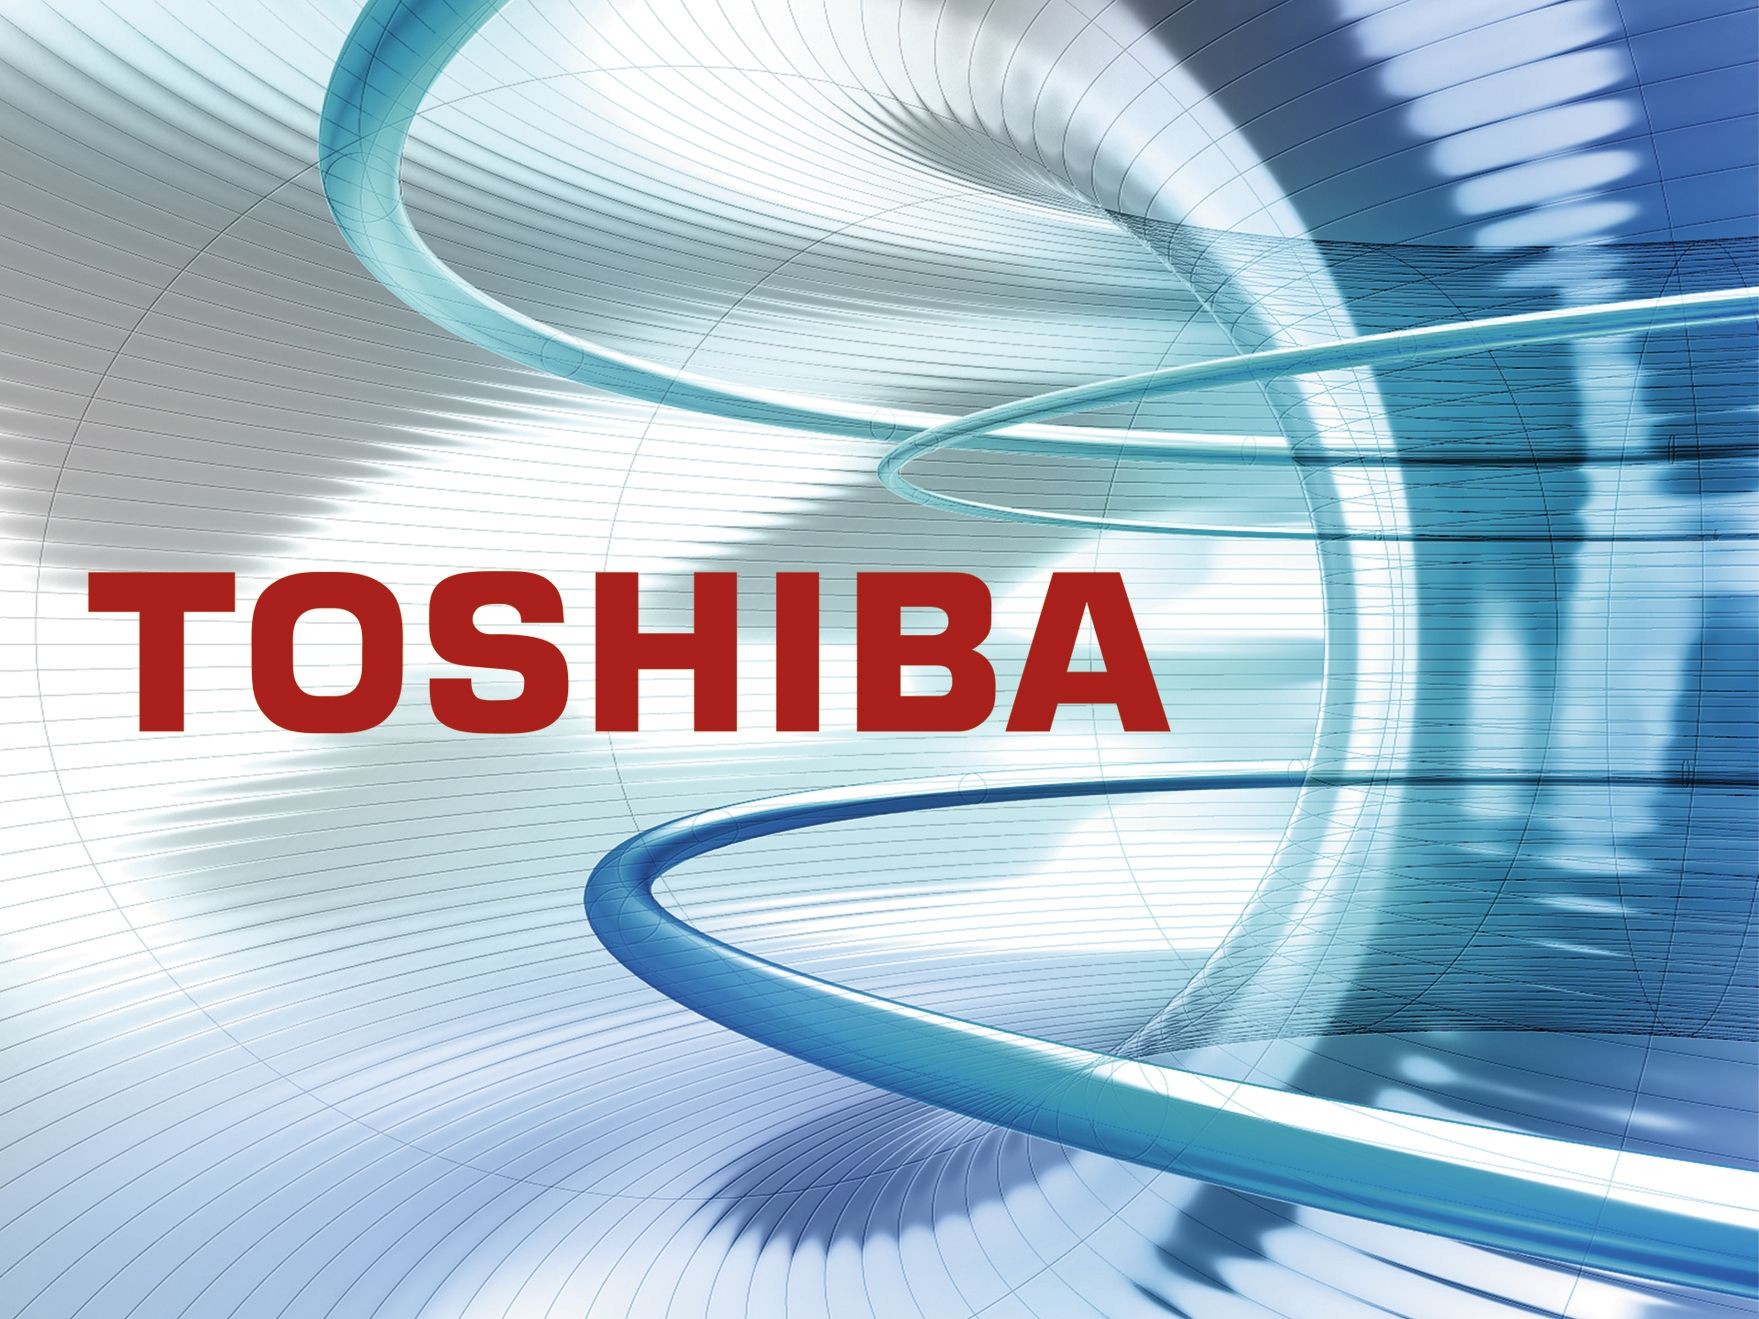 Toshiba Computer Wallpapers, Desktop Backgrounds | 1759x1319 | ID ...